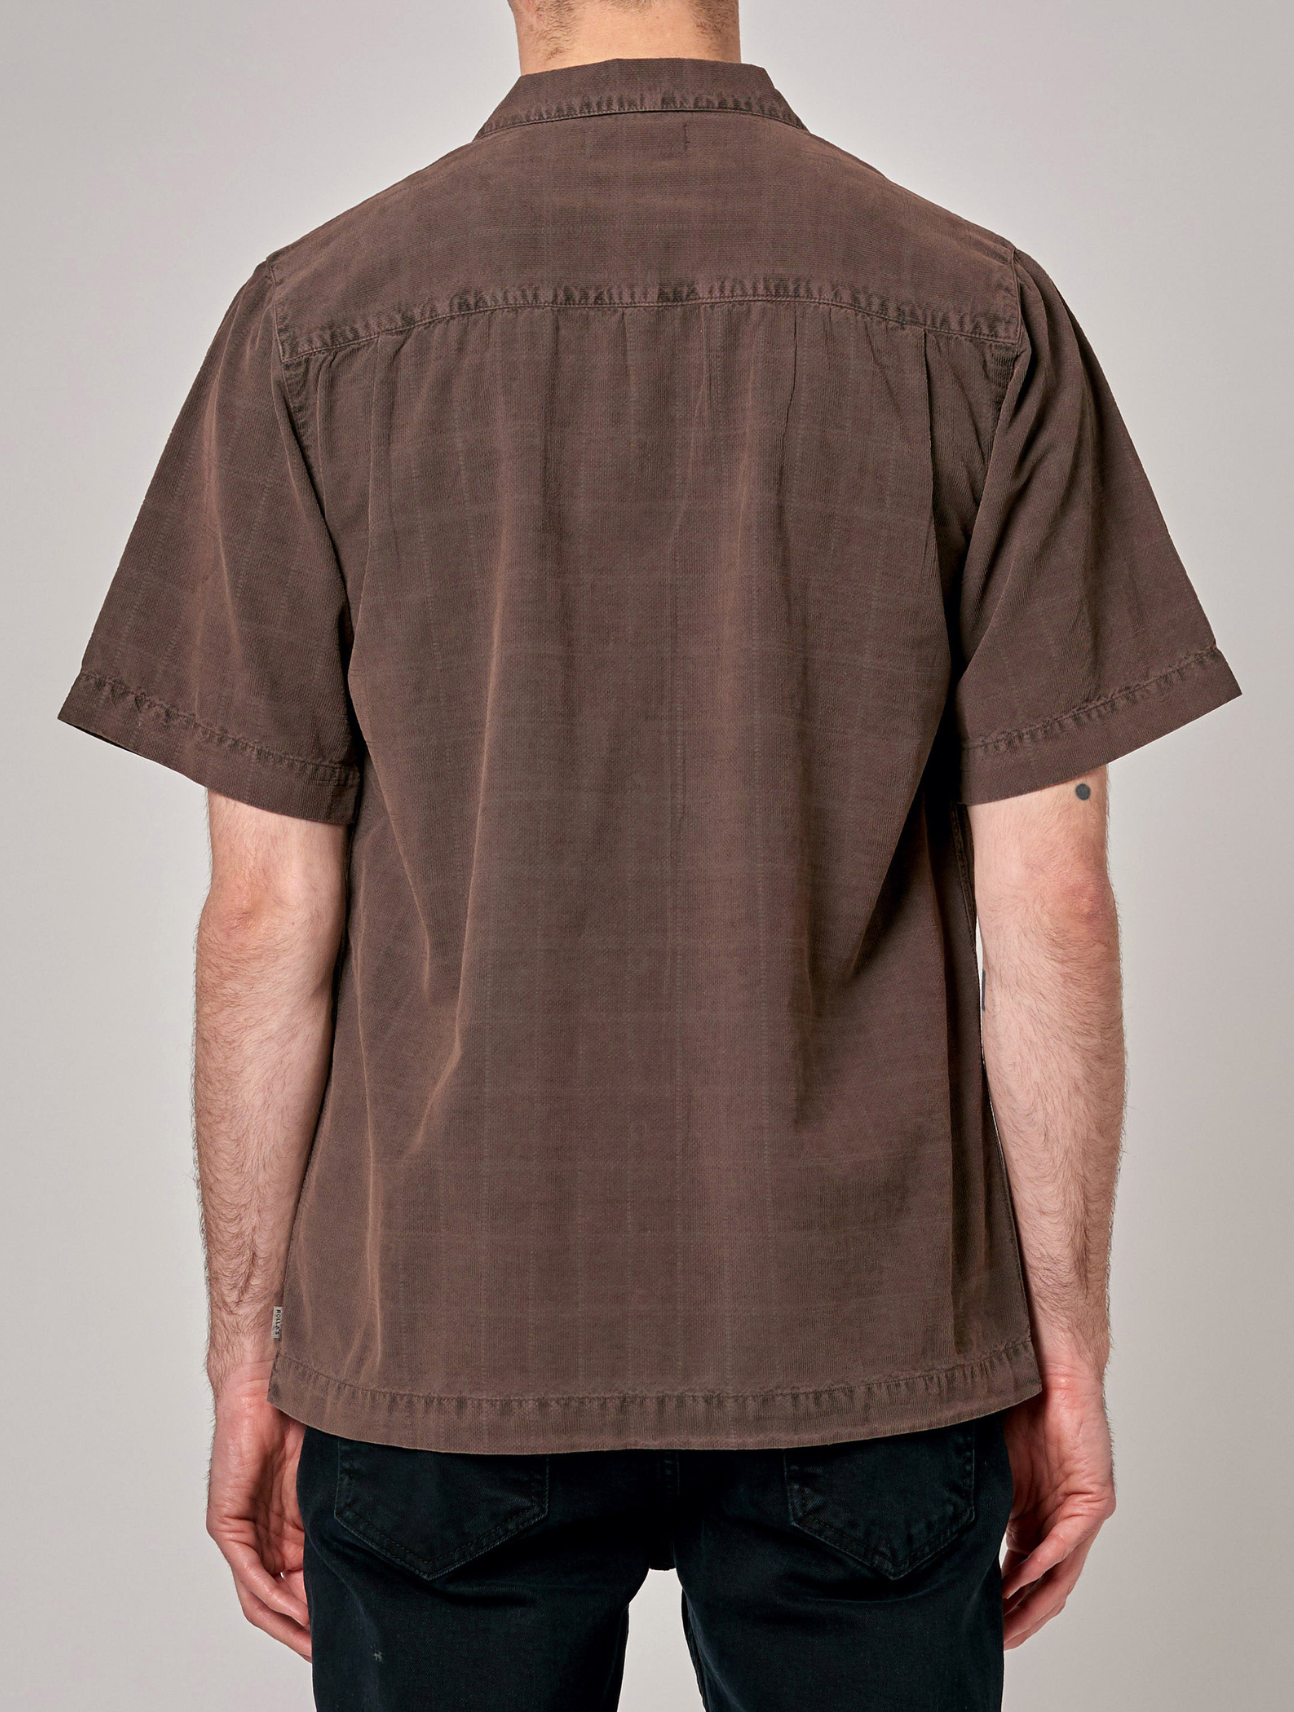 Tile Cord Bowler Shirt